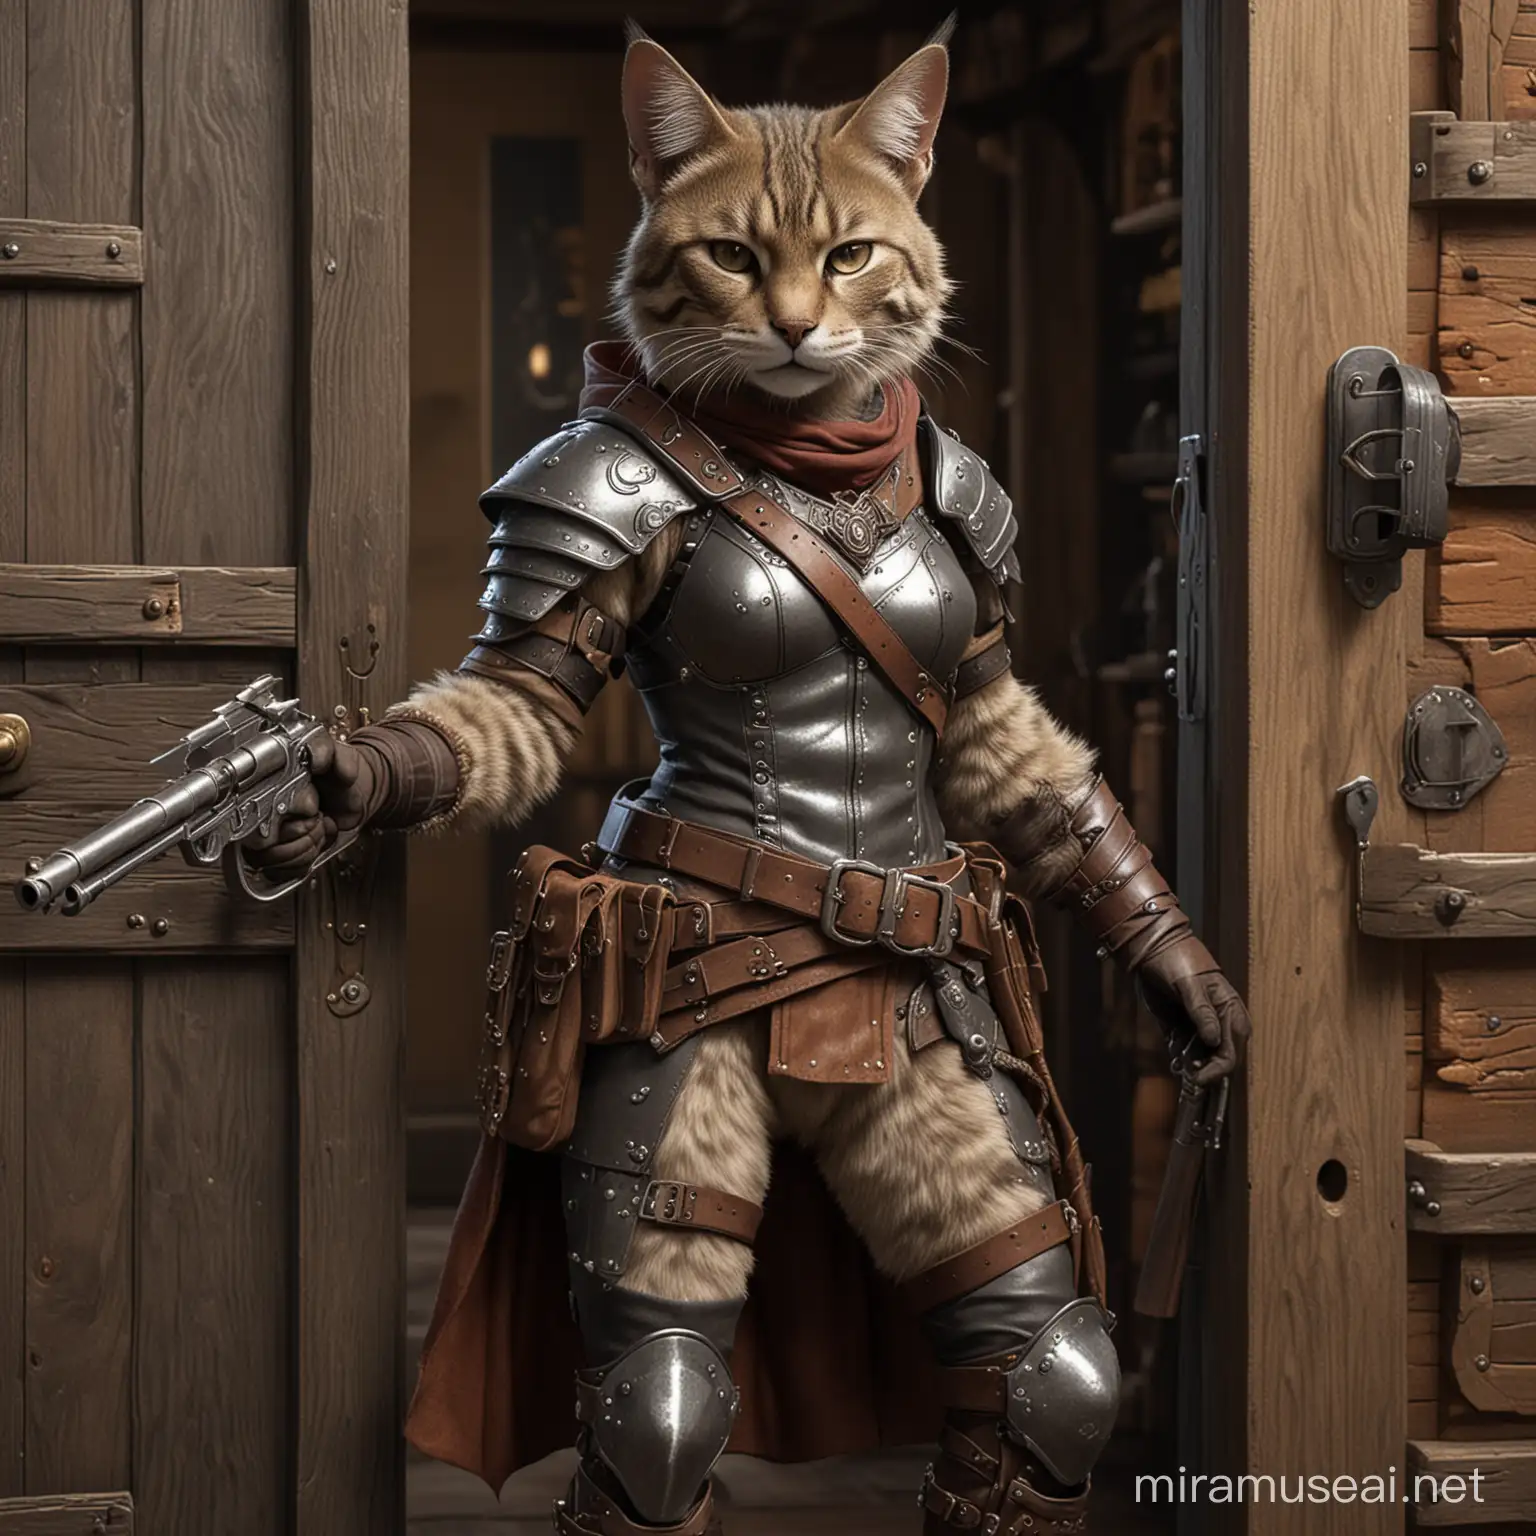 Tabaxi Gunslinger Enters Tavern in Leather Armor